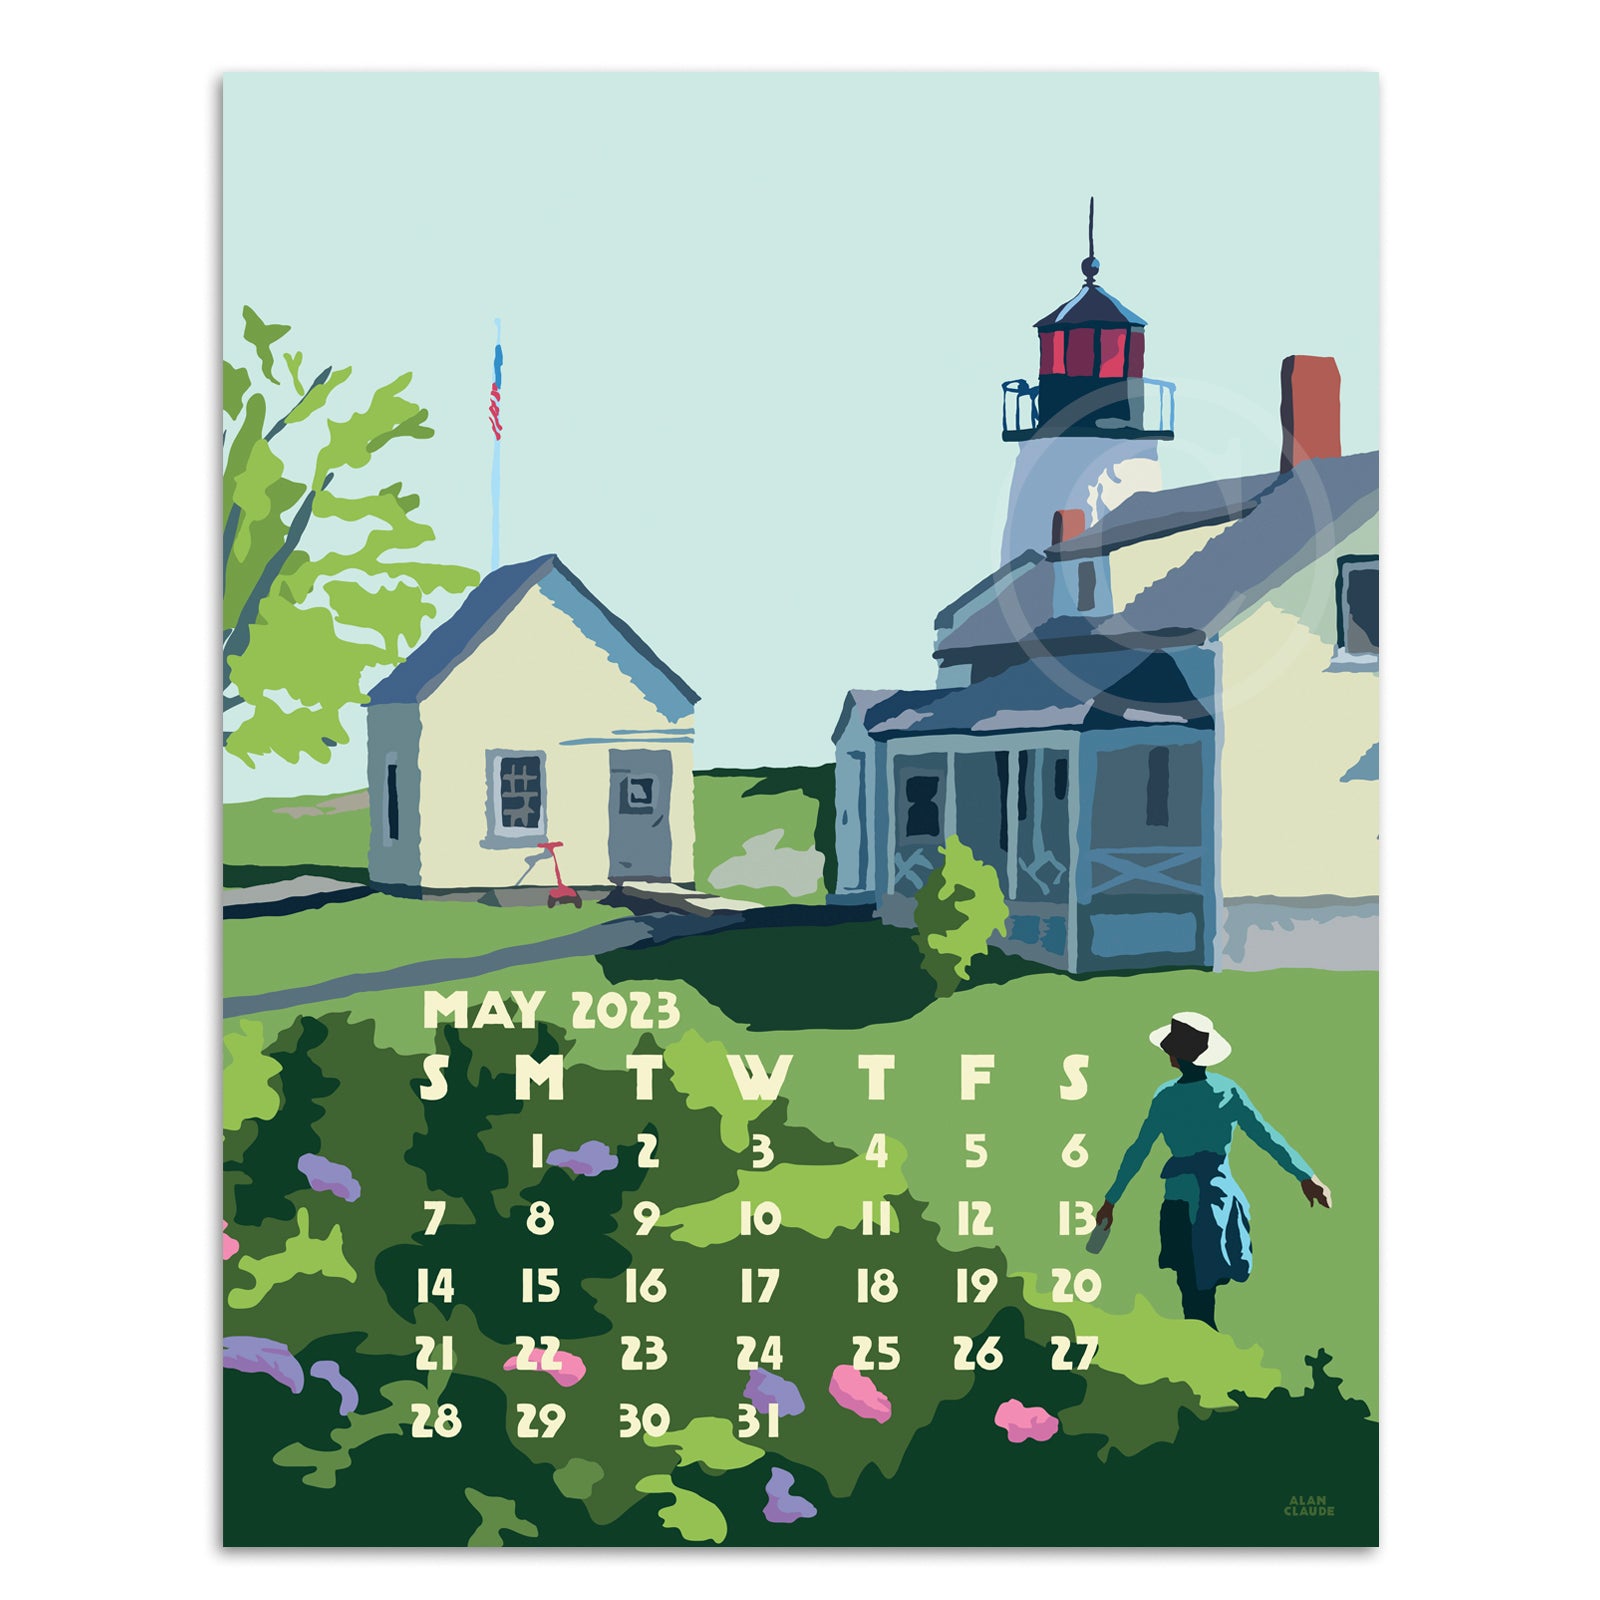 2023 POSTER Art Calendar 11x14 Retro Vintage Art Style by Maine Artist Alan Claude